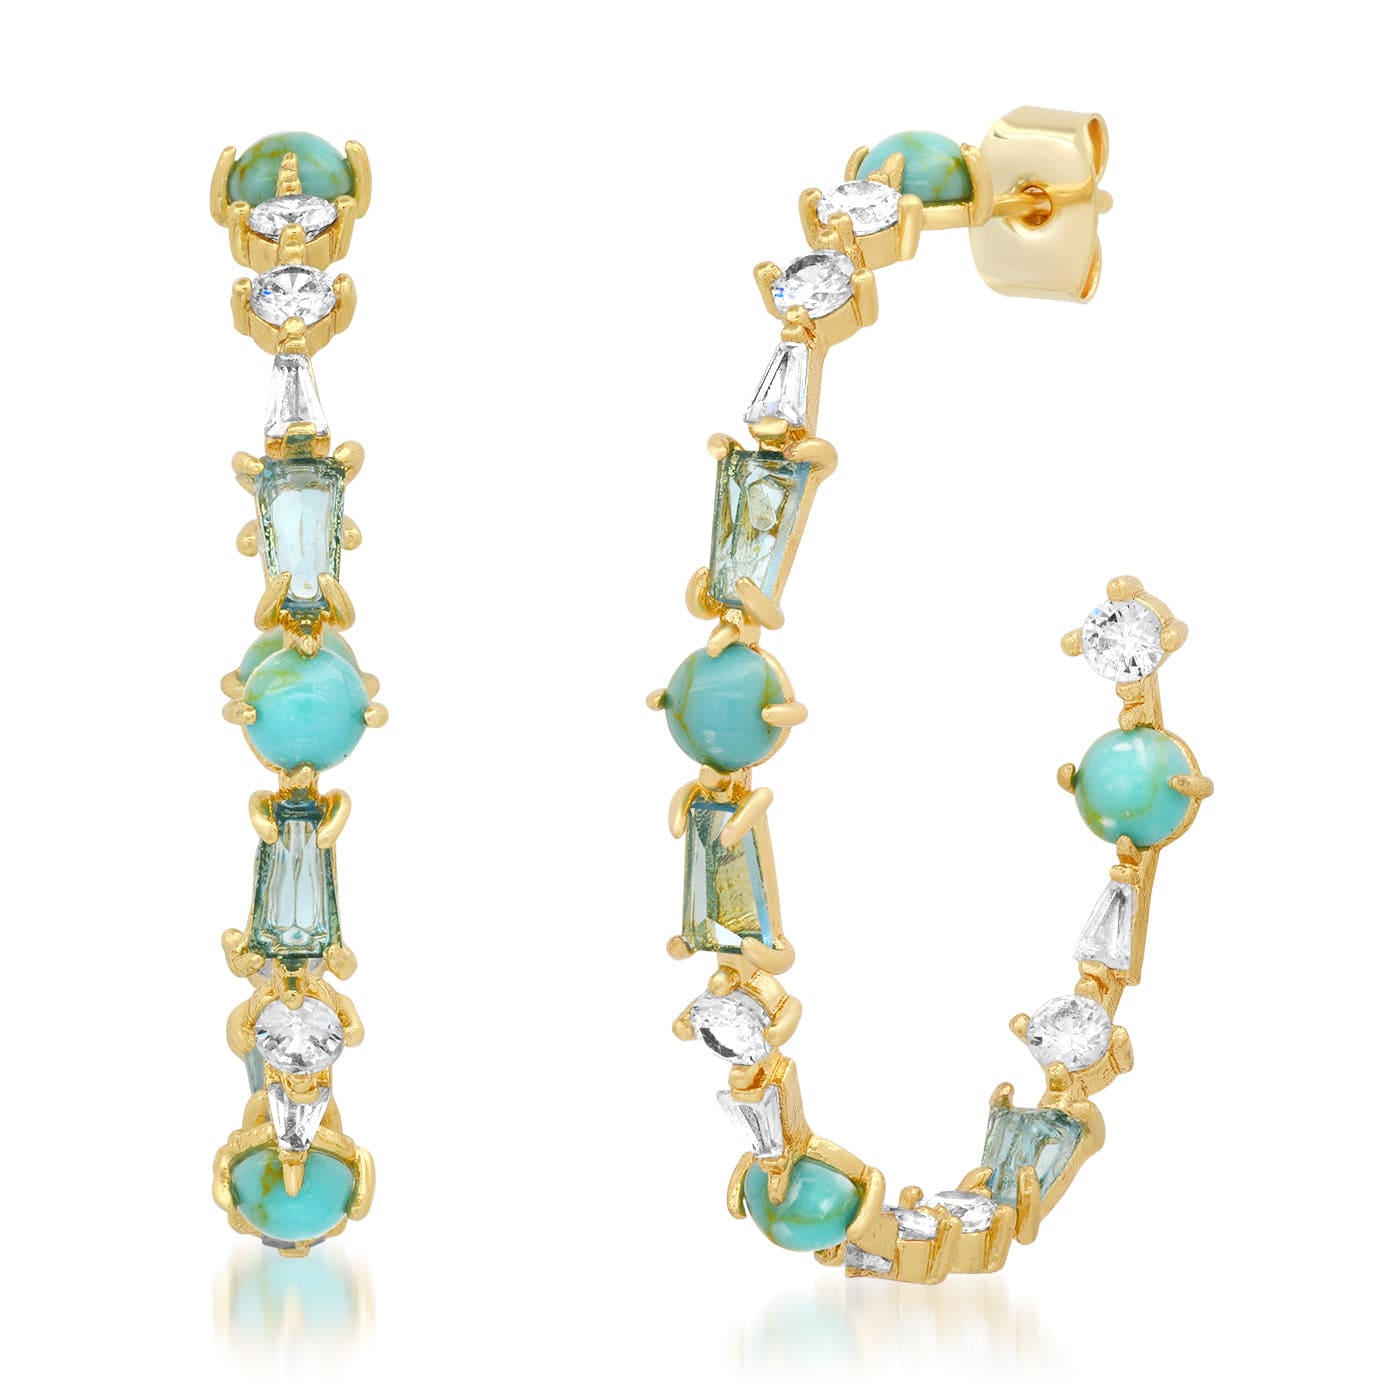 TAI JEWELRY Earrings Aqua Mosaic Crystal Hoop Earrings